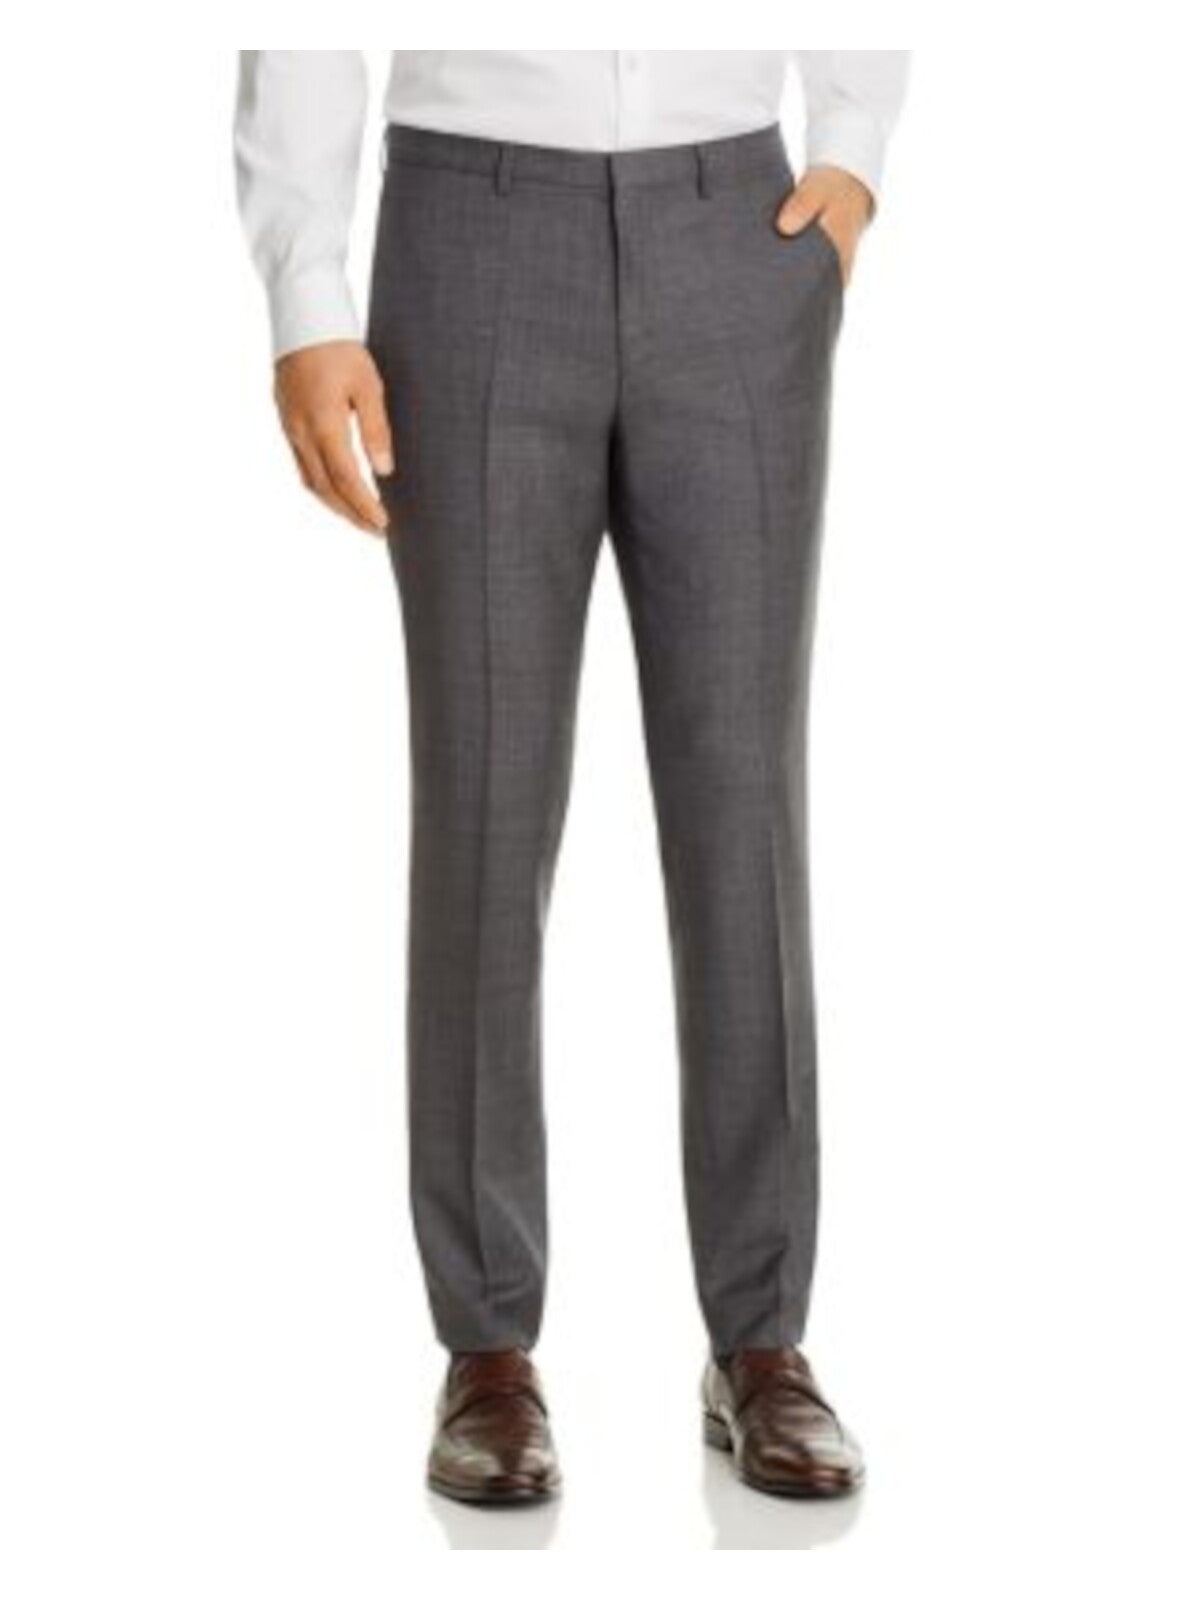 HUGO BOSS Mens Hesten Gray Flat Front, Extra Slim Fit Wool Blend Suit Separate Pants 34R